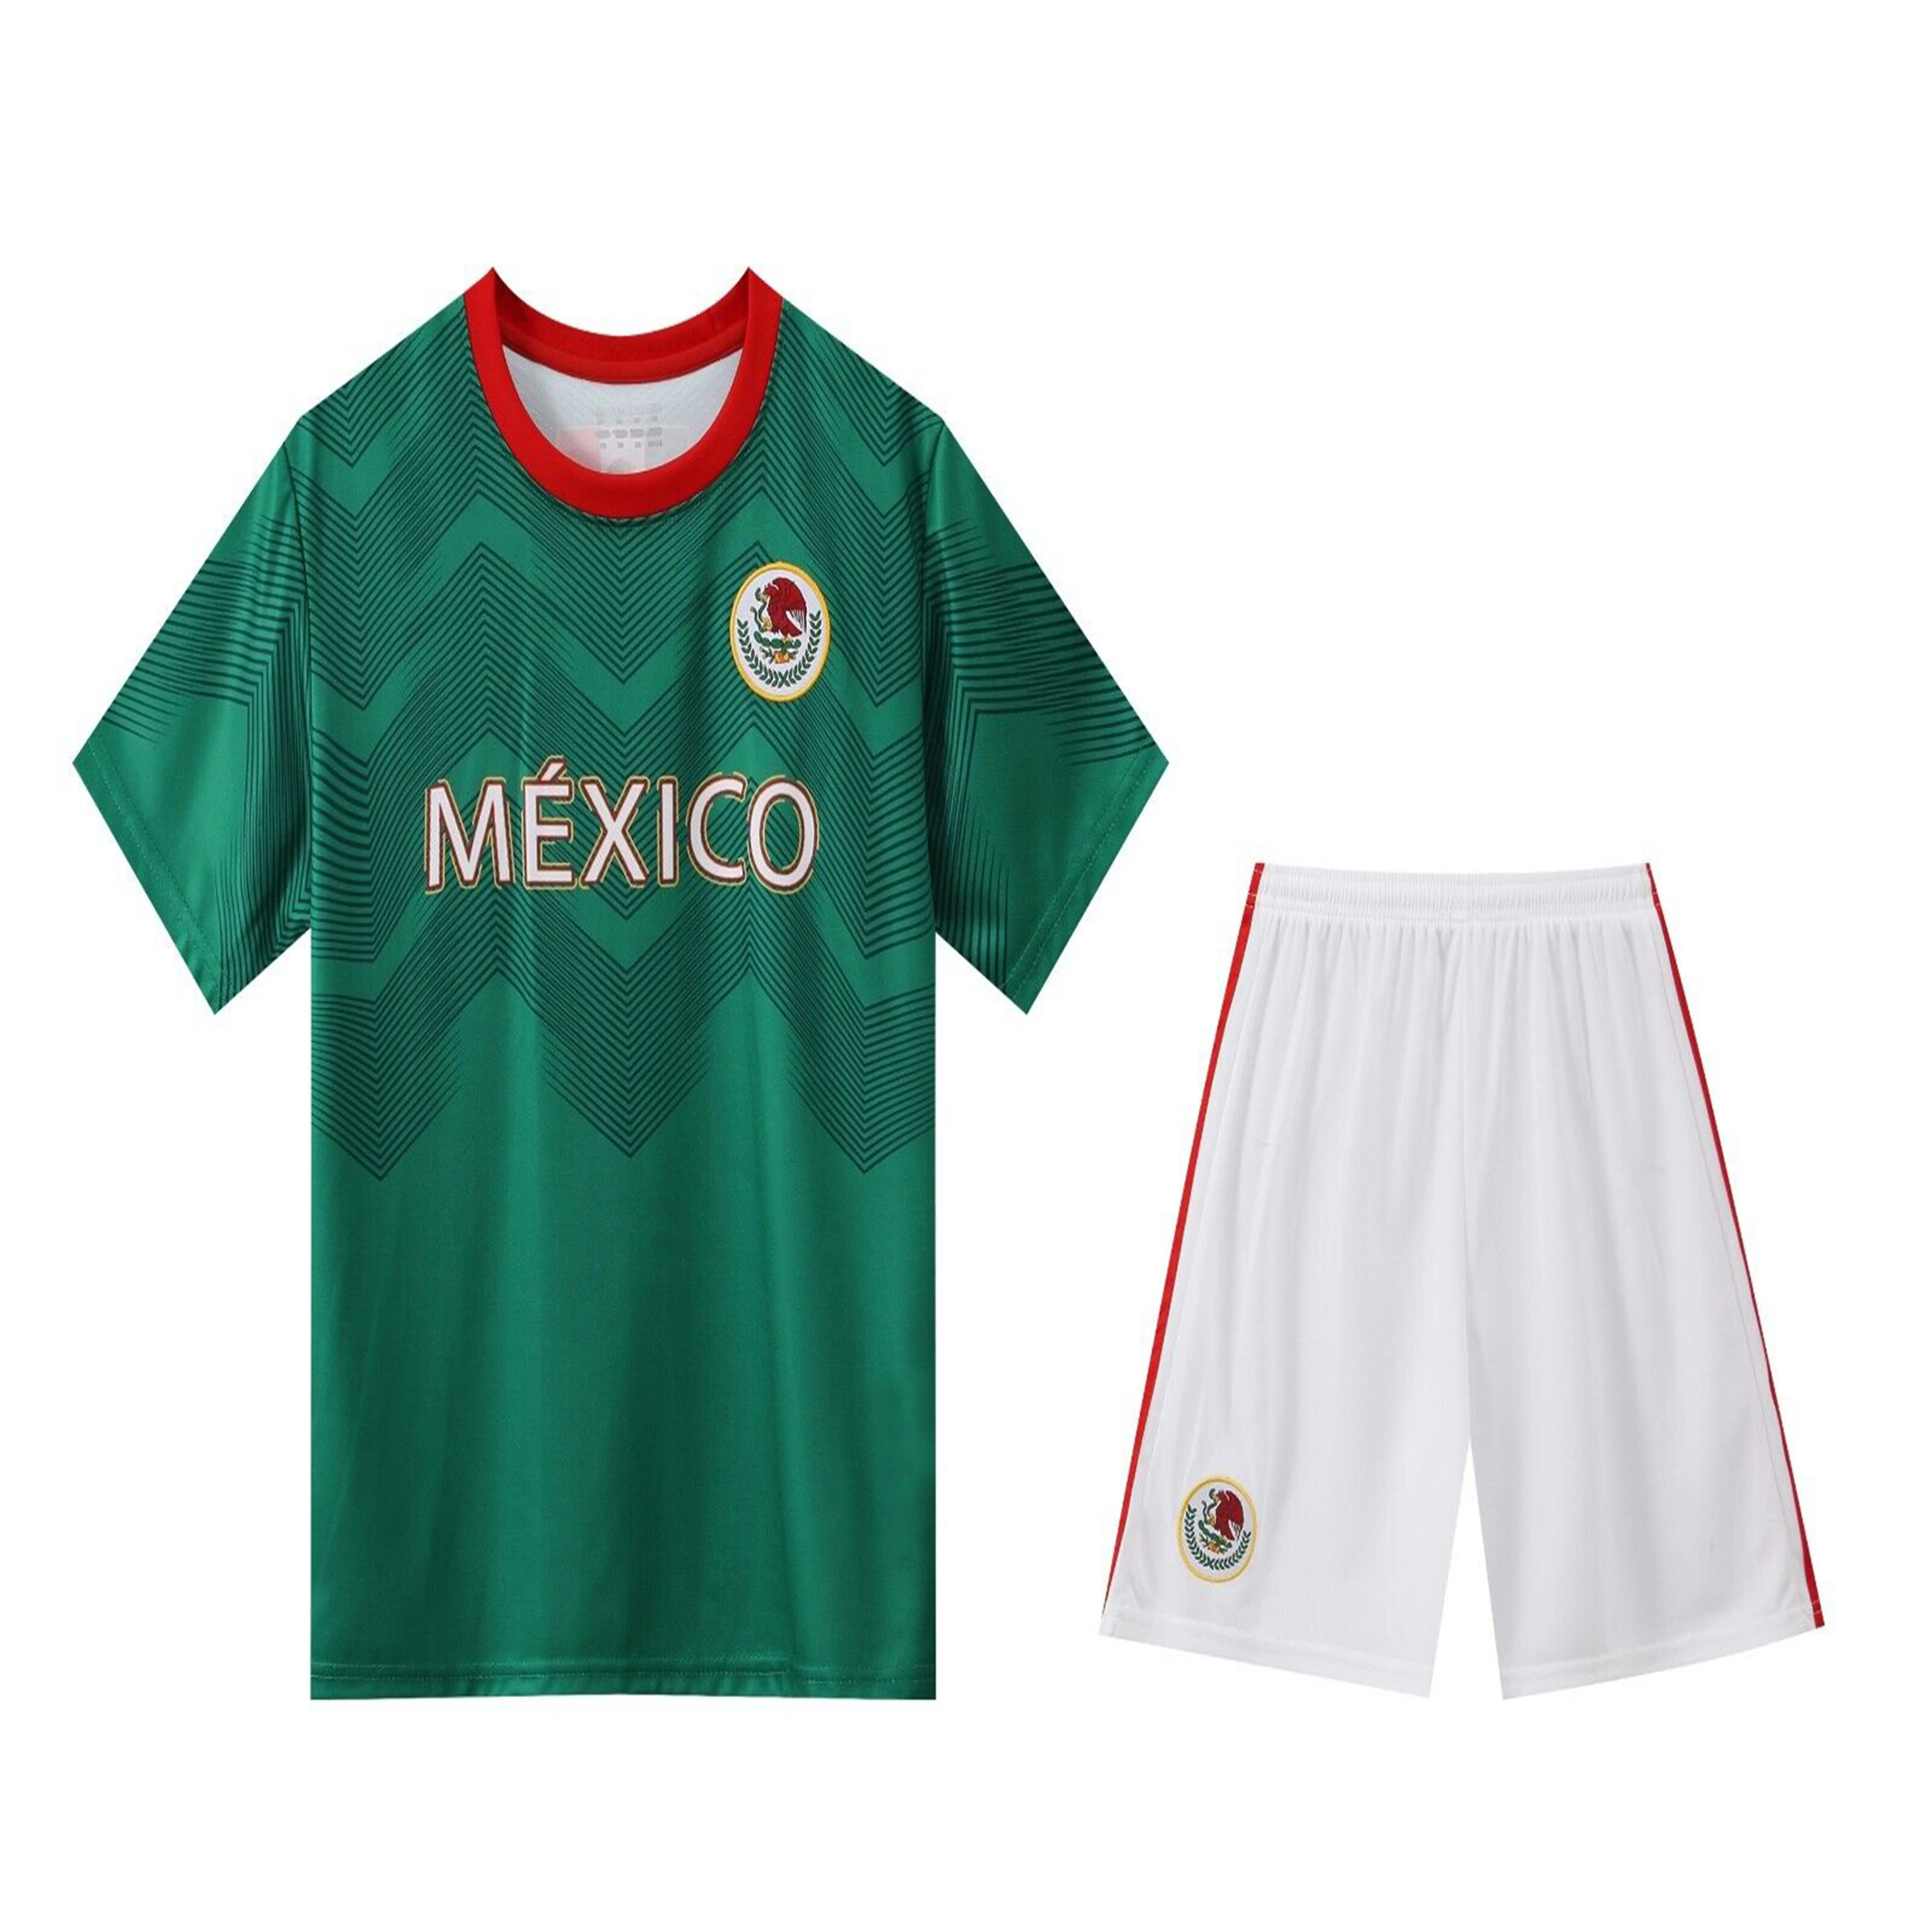 Mexico Flag Kids Boys Sports T-shirt and Shorts Custom Teamname/Kids Name Youth Soccer Football Jersey Shirt Set Drop Shipping